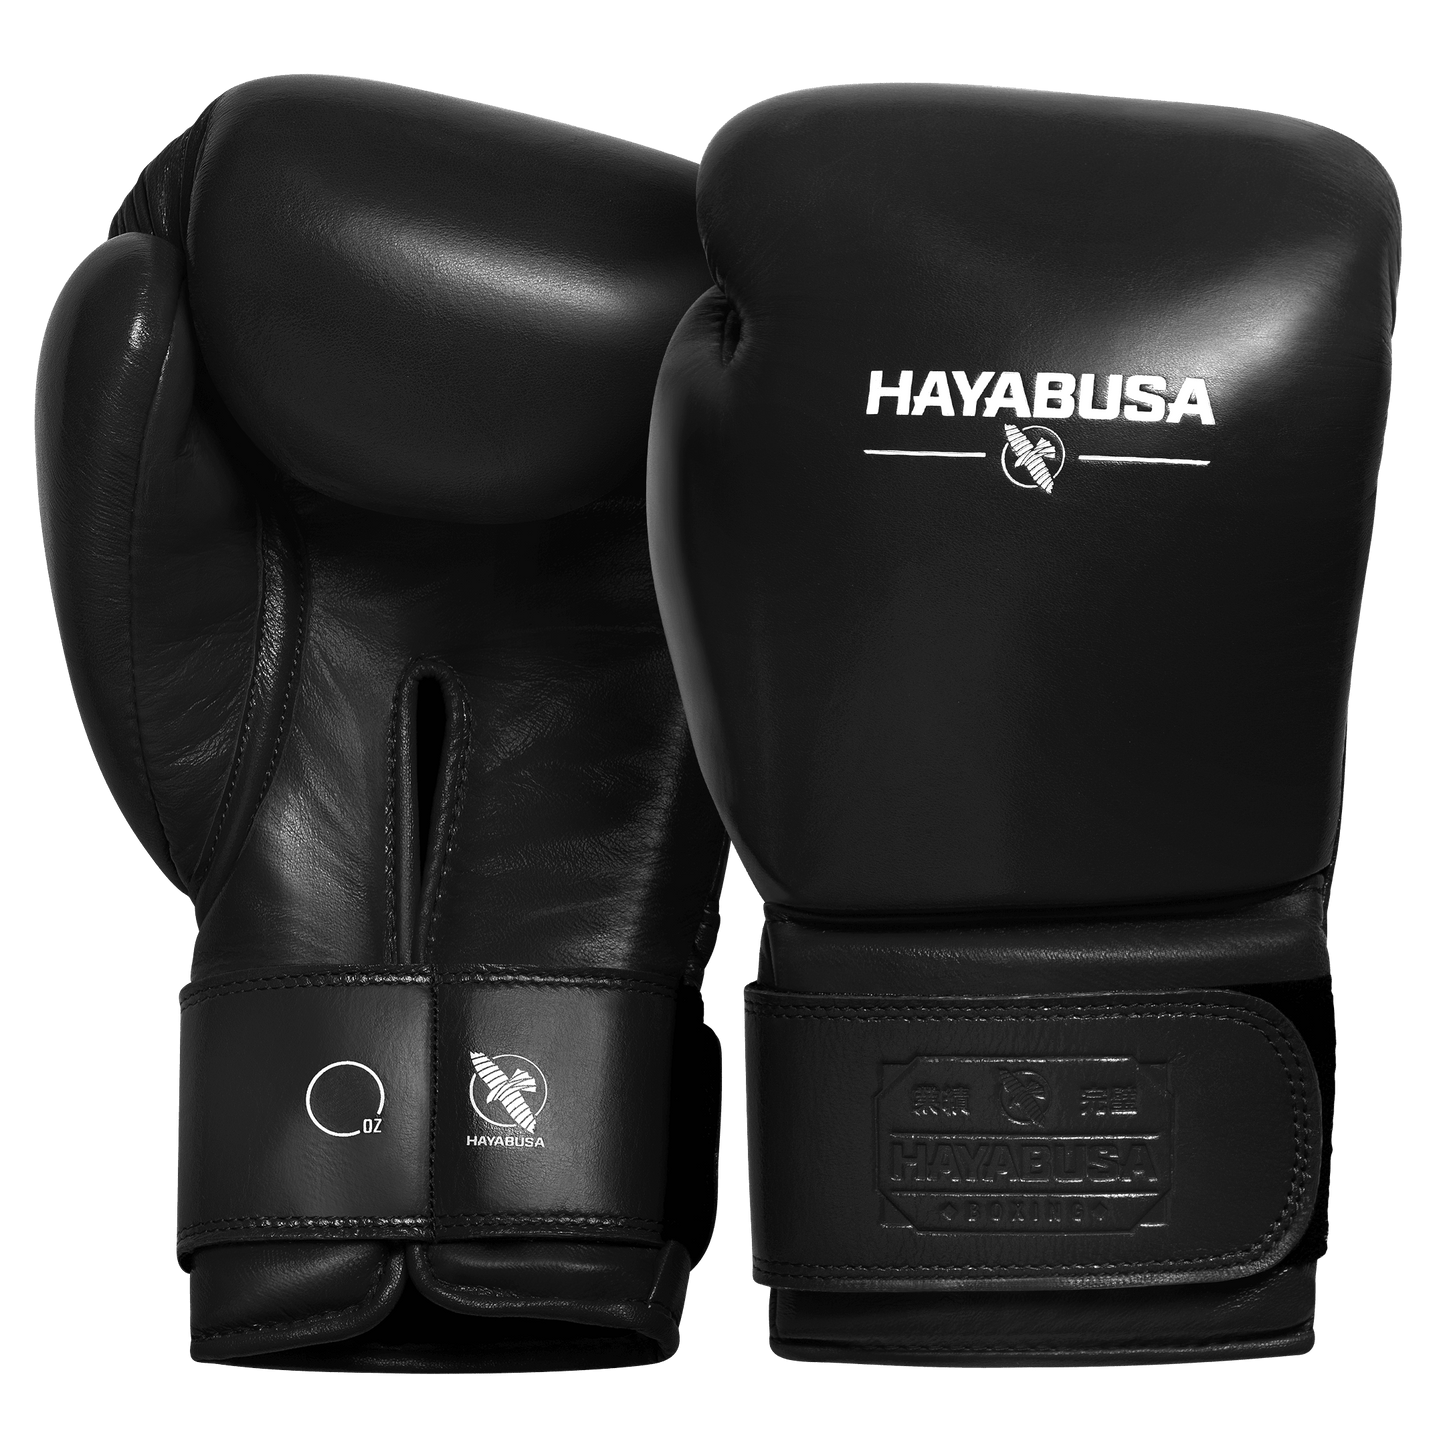 Hayabusa Pro Boxing Gloves - Violent Art Shop